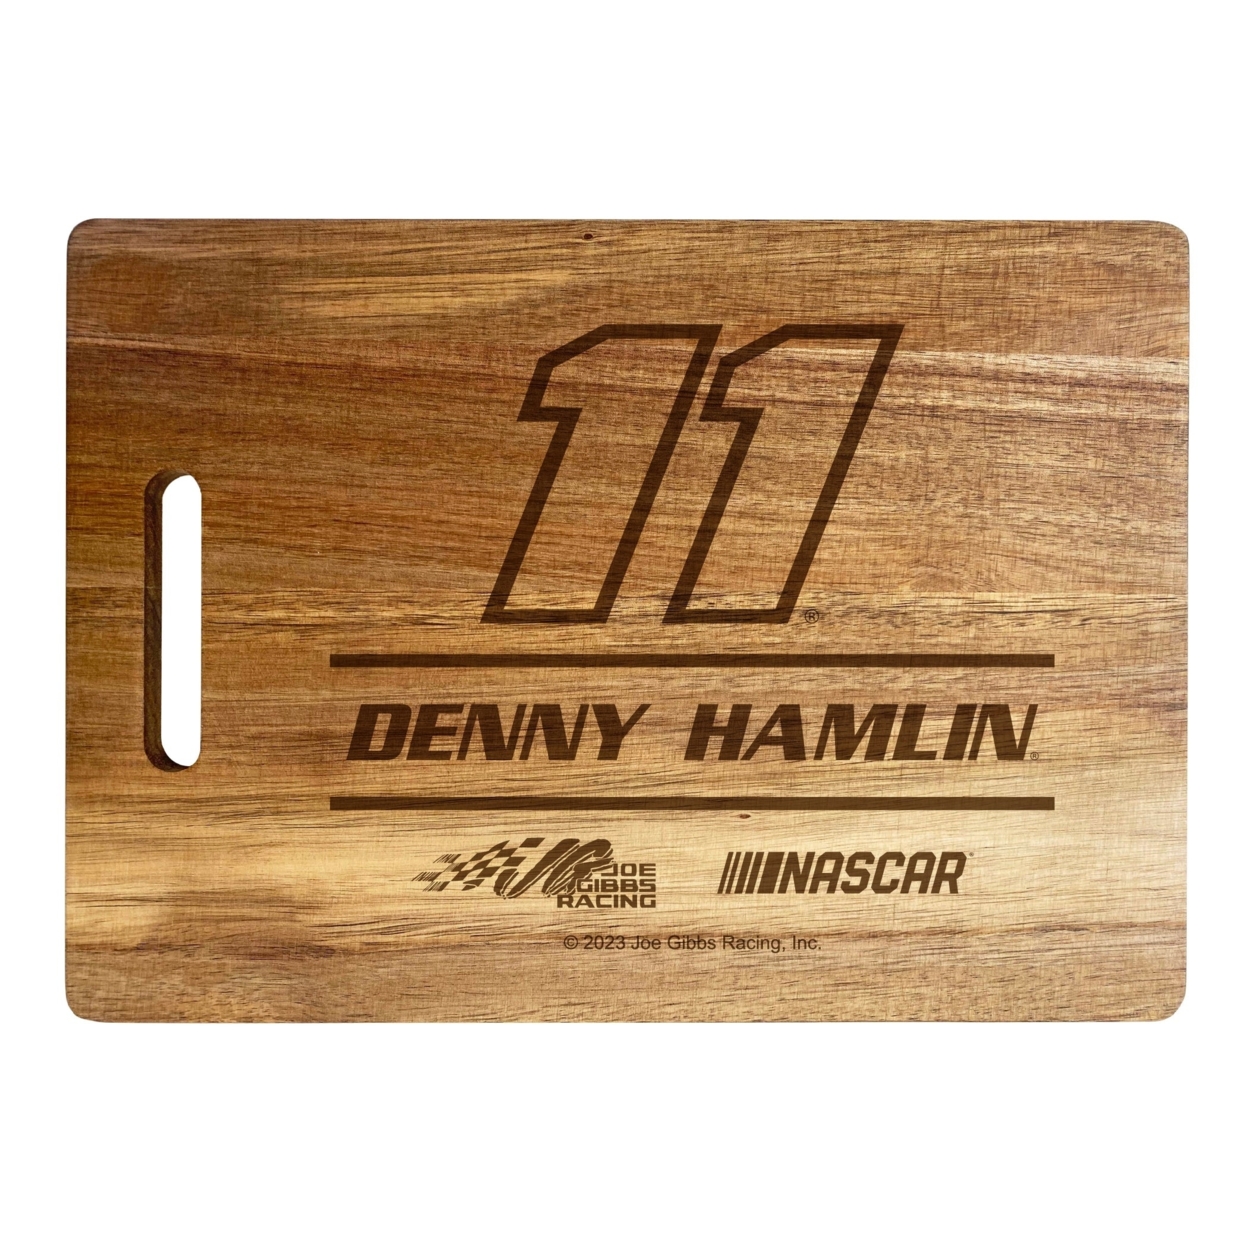 #11 Denny Hamlin NASCAR Officially Licensed Engraved Wooden Cutting Board